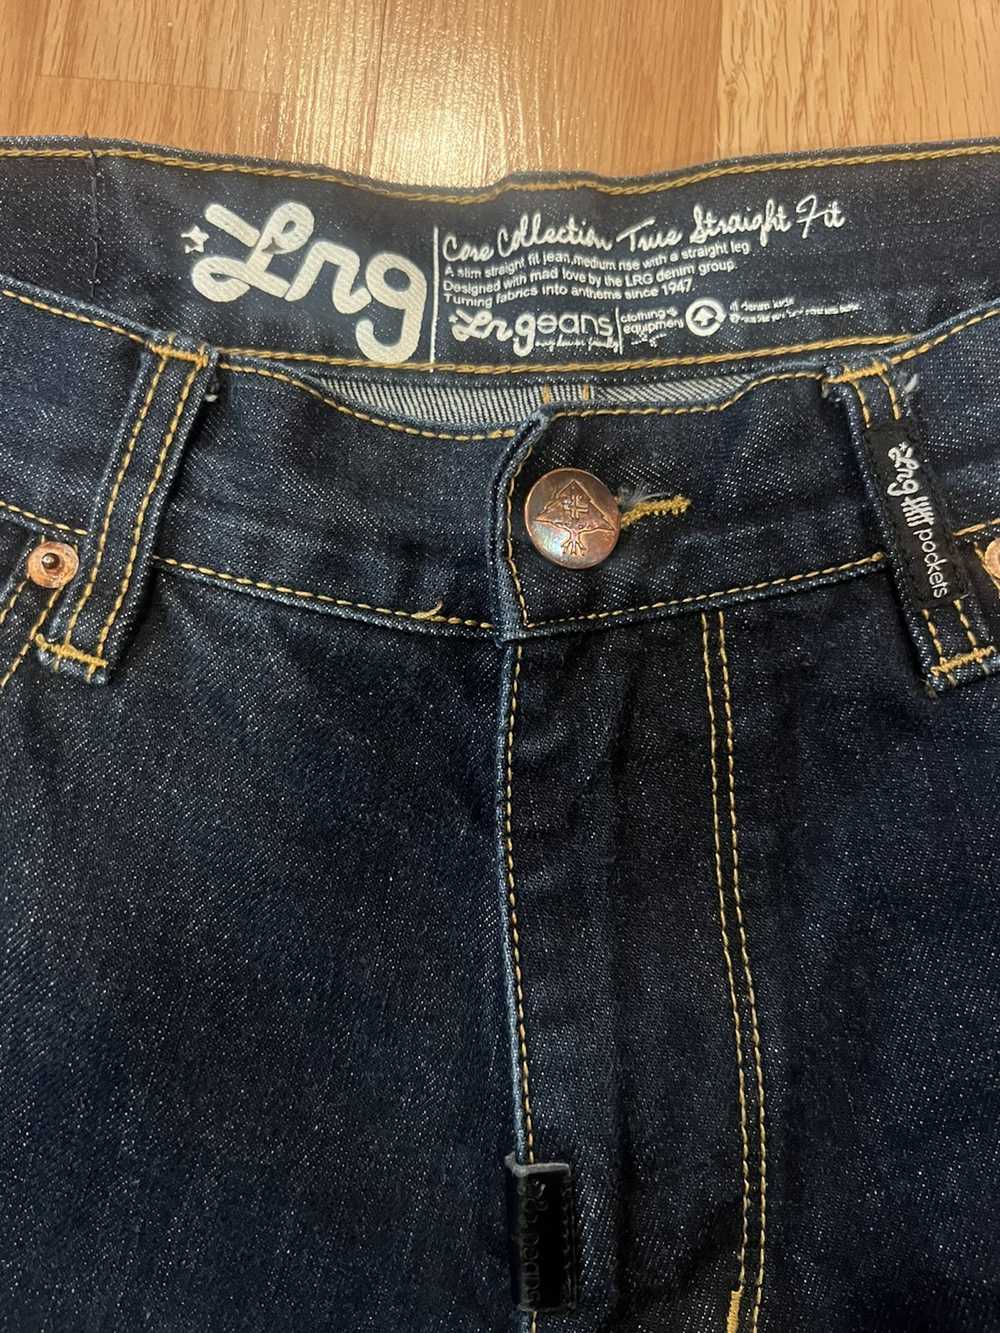 LRG LRG jeans - image 2